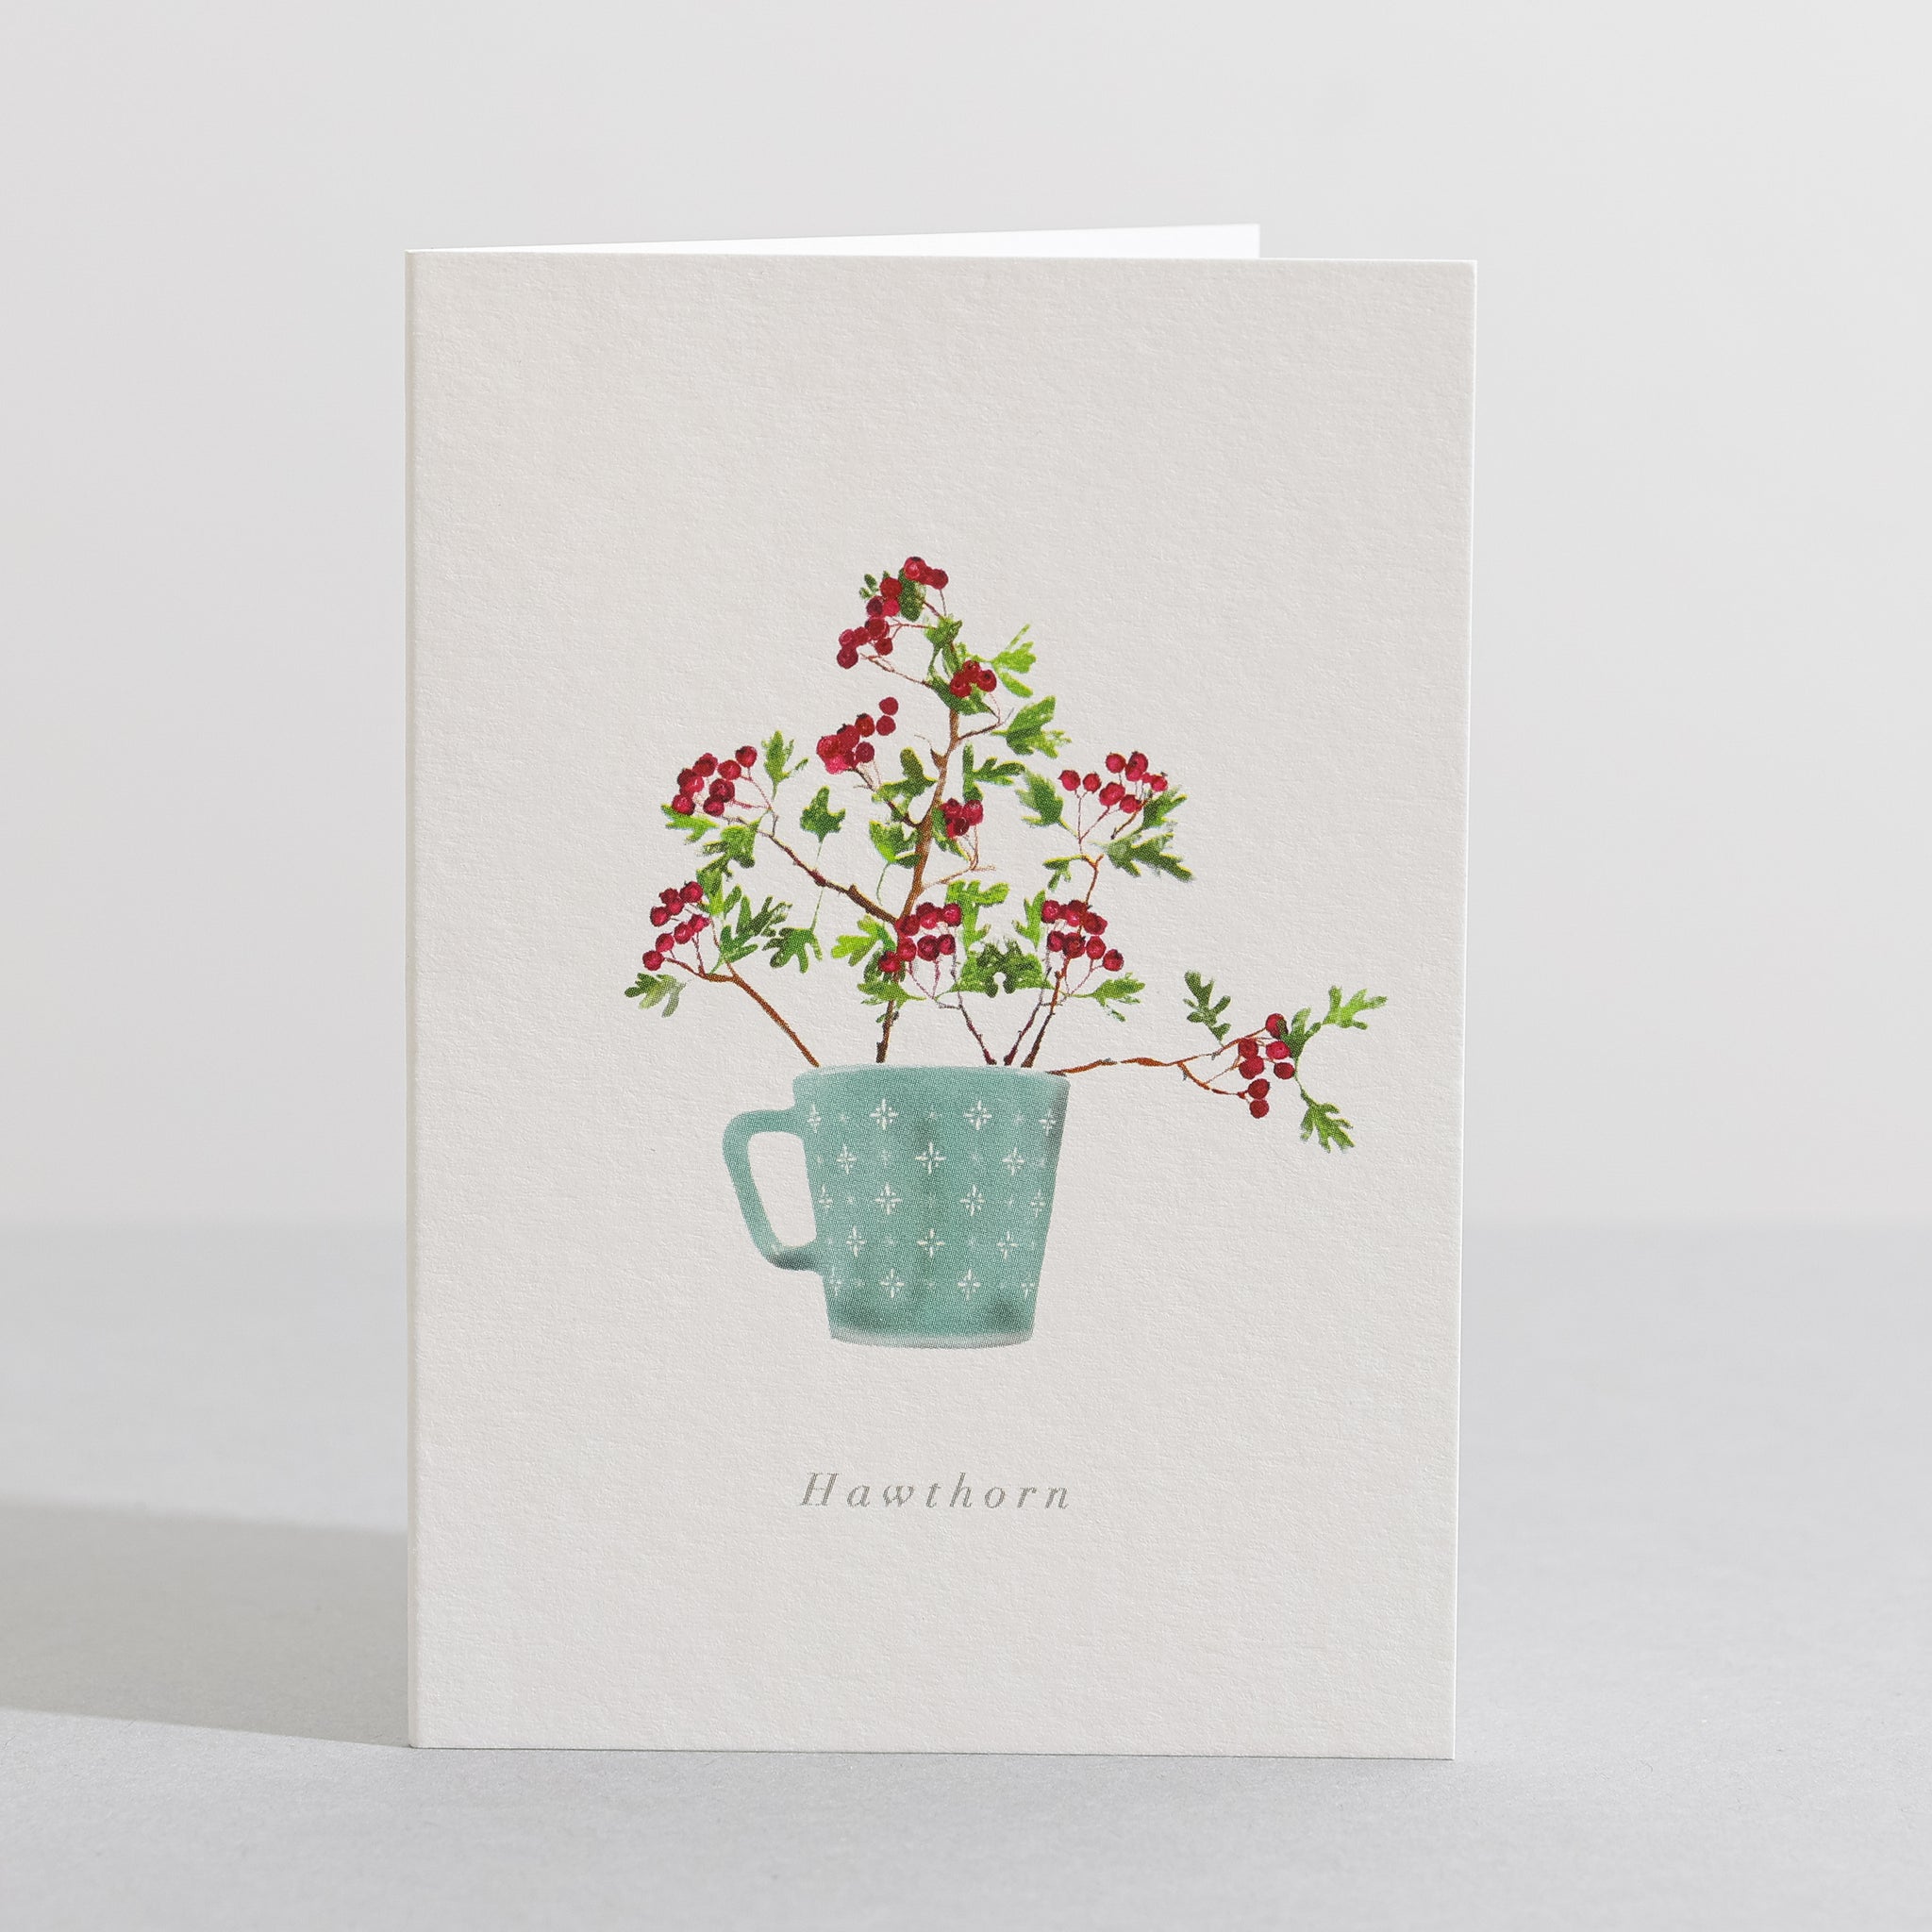 Hawthorn greetings card by Sara Sayer